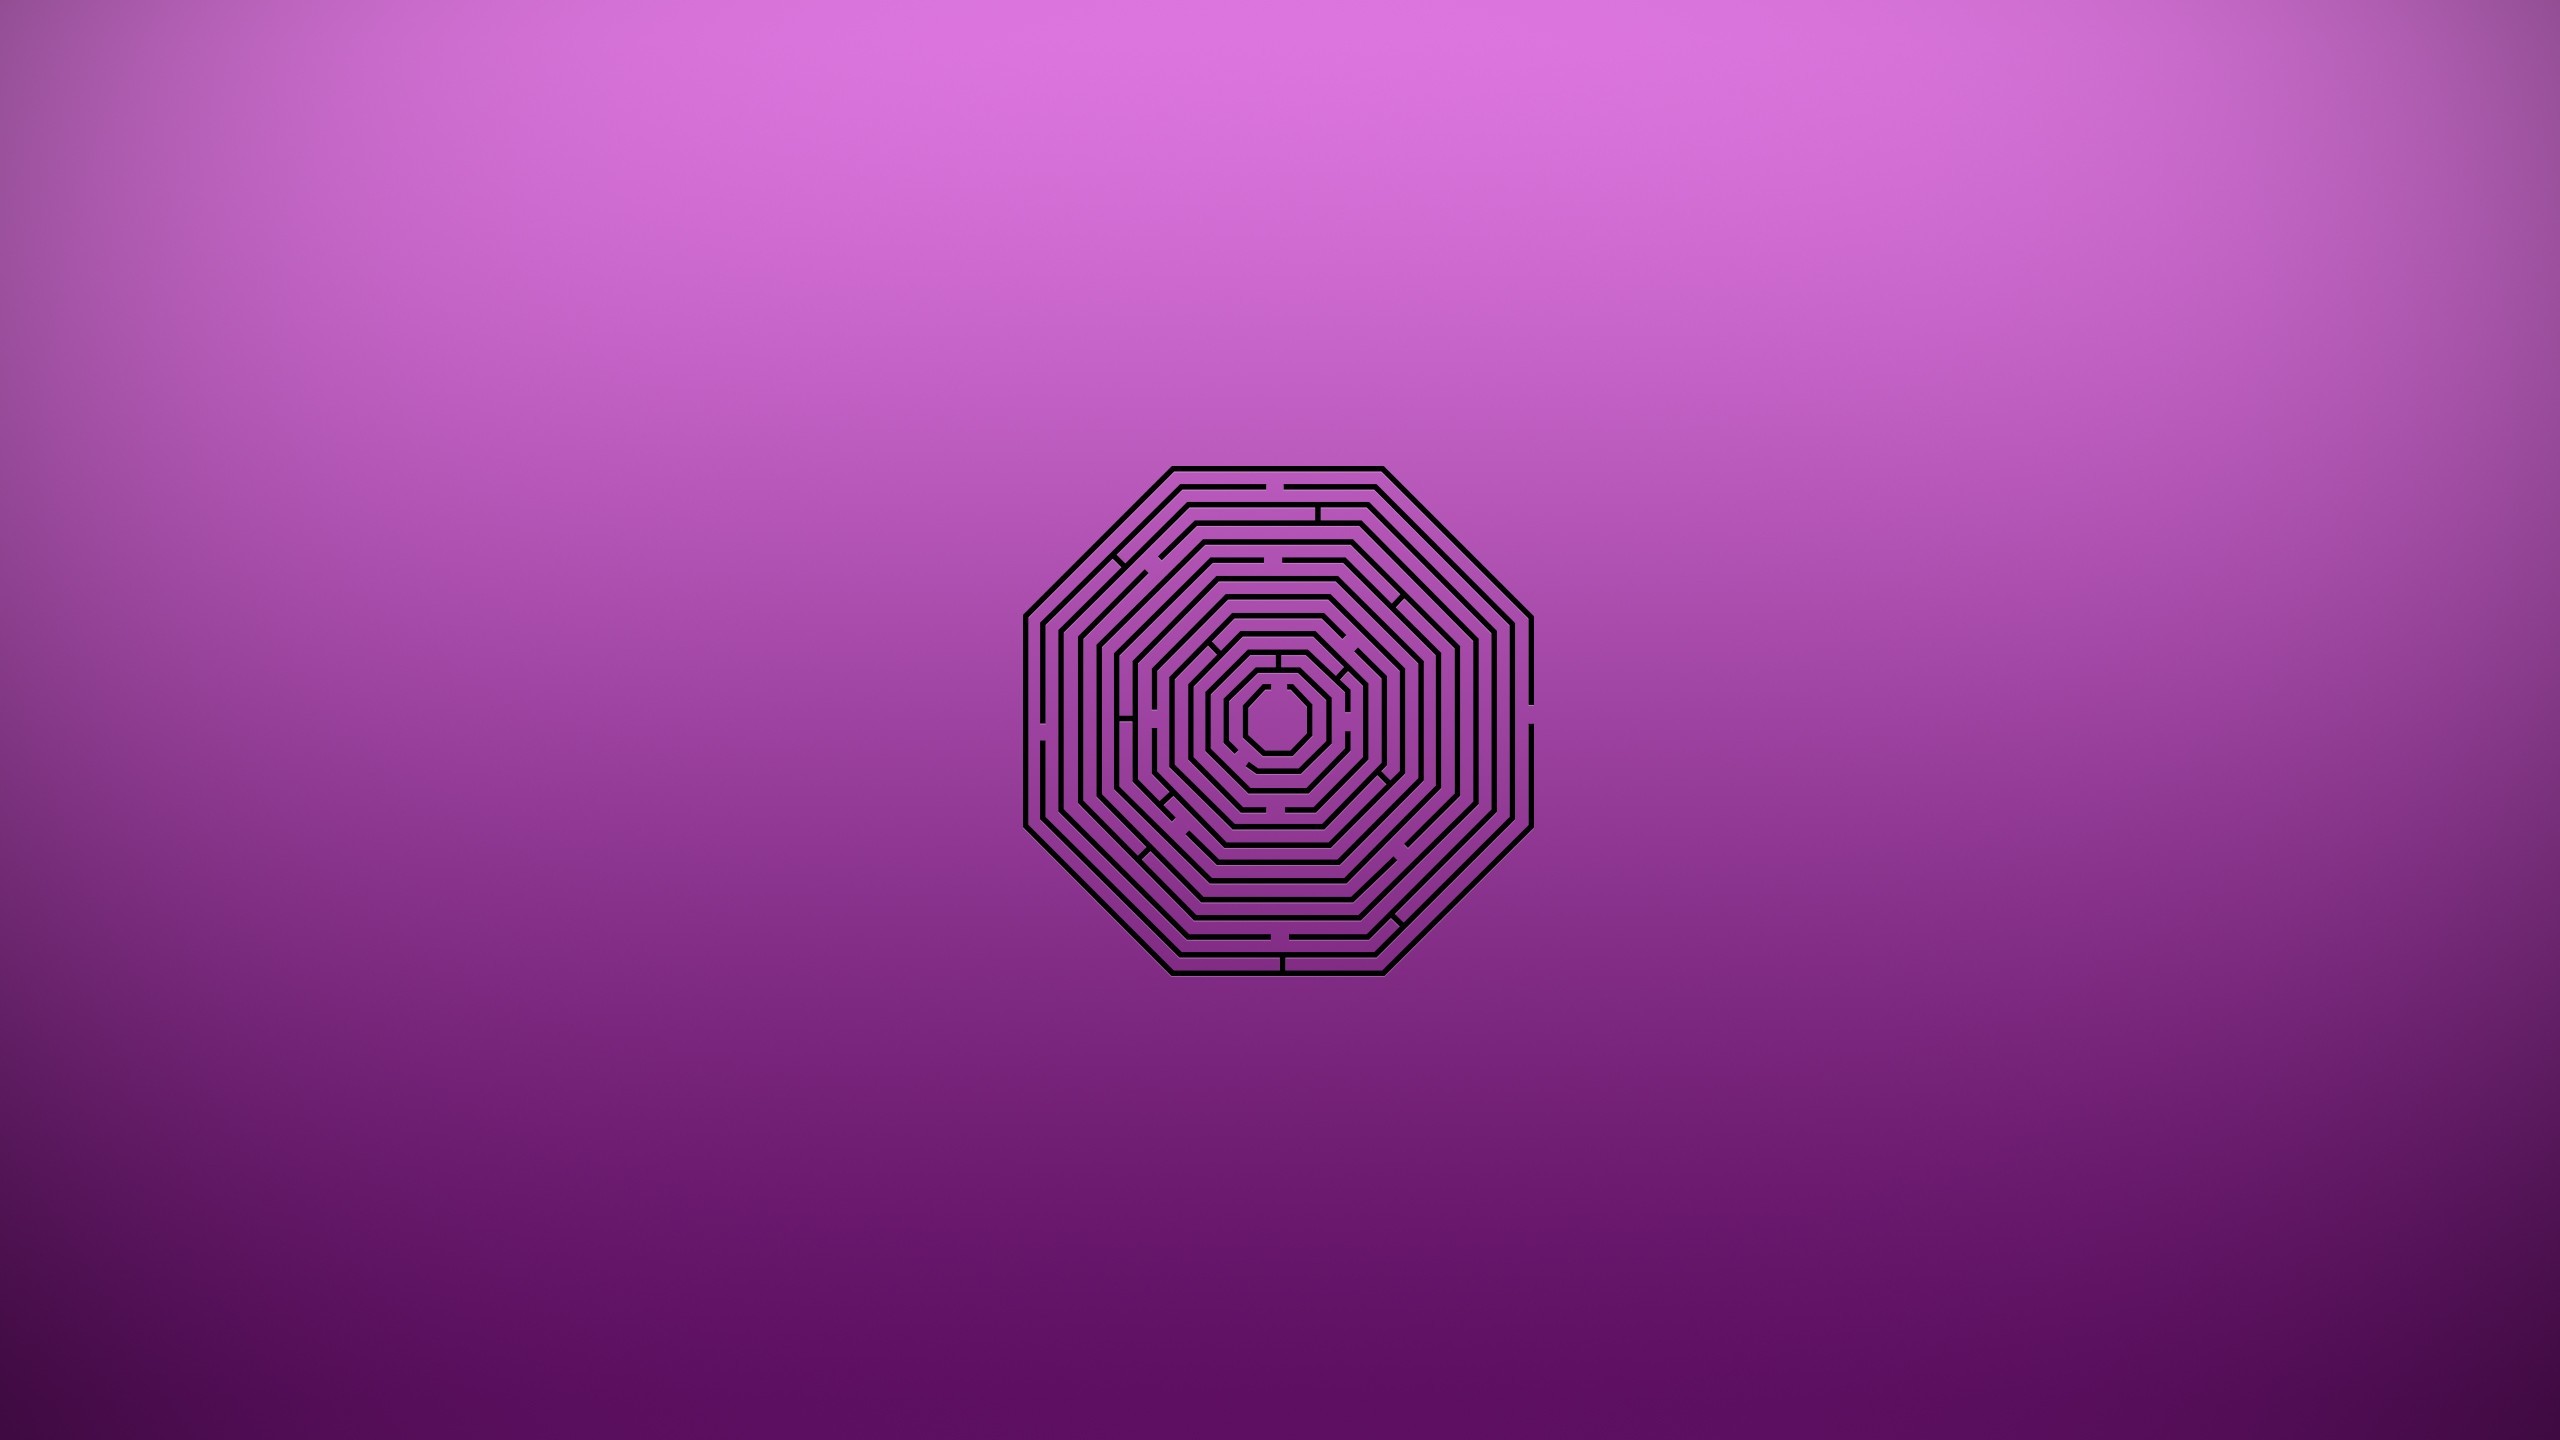 Purple Maze Wallpaper 61183 2560x1440.